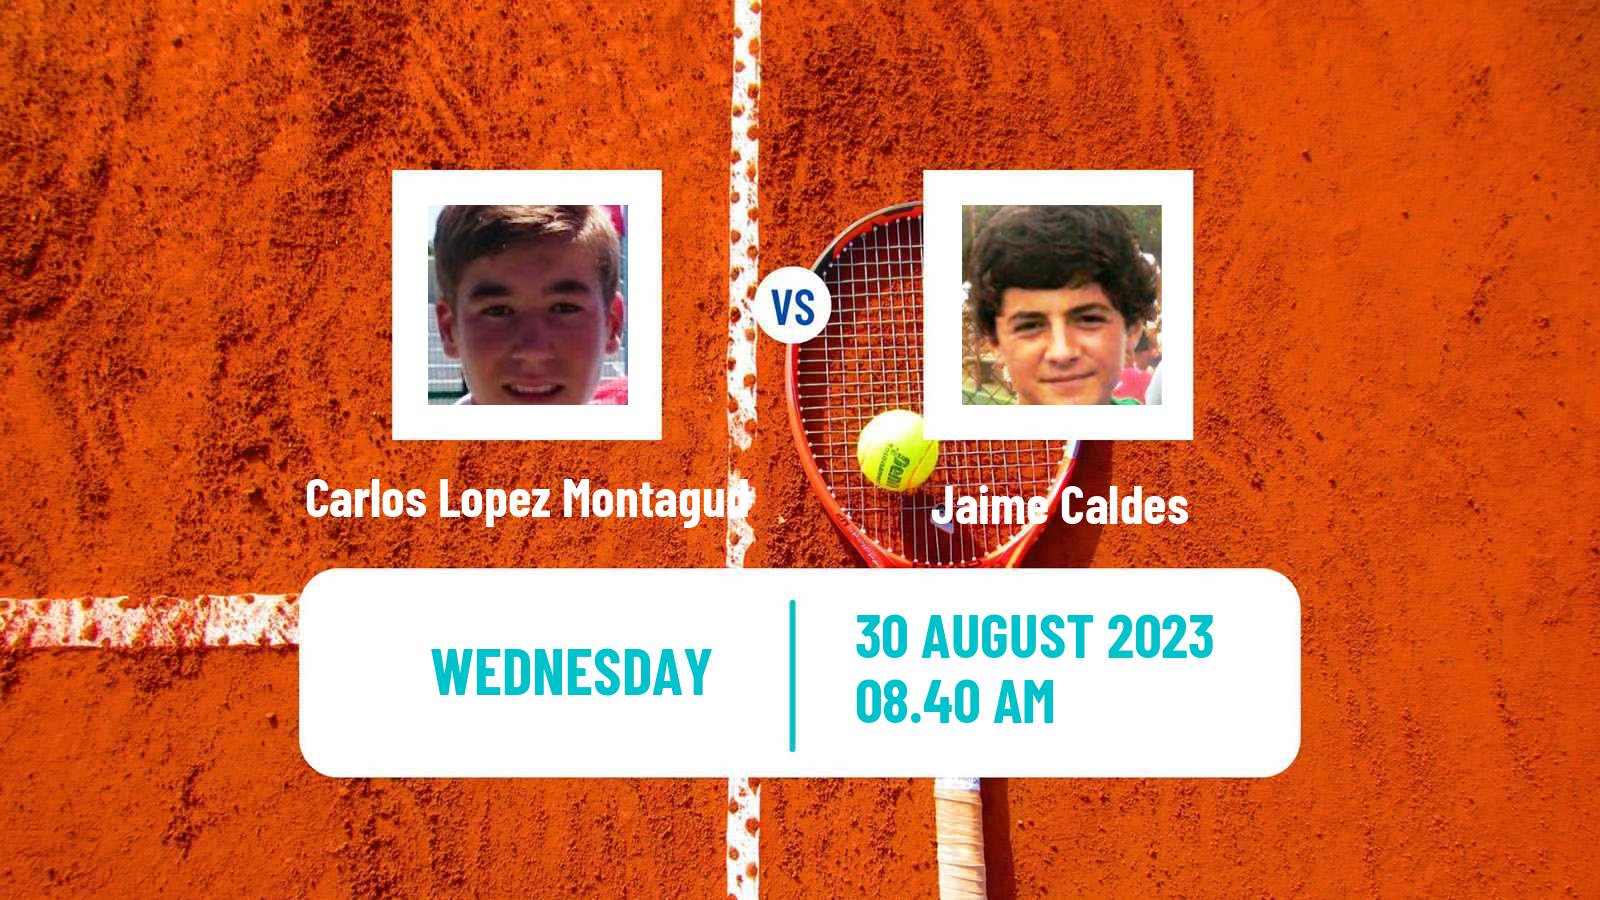 Tennis ITF M25 Oviedo Men Carlos Lopez Montagud - Jaime Caldes